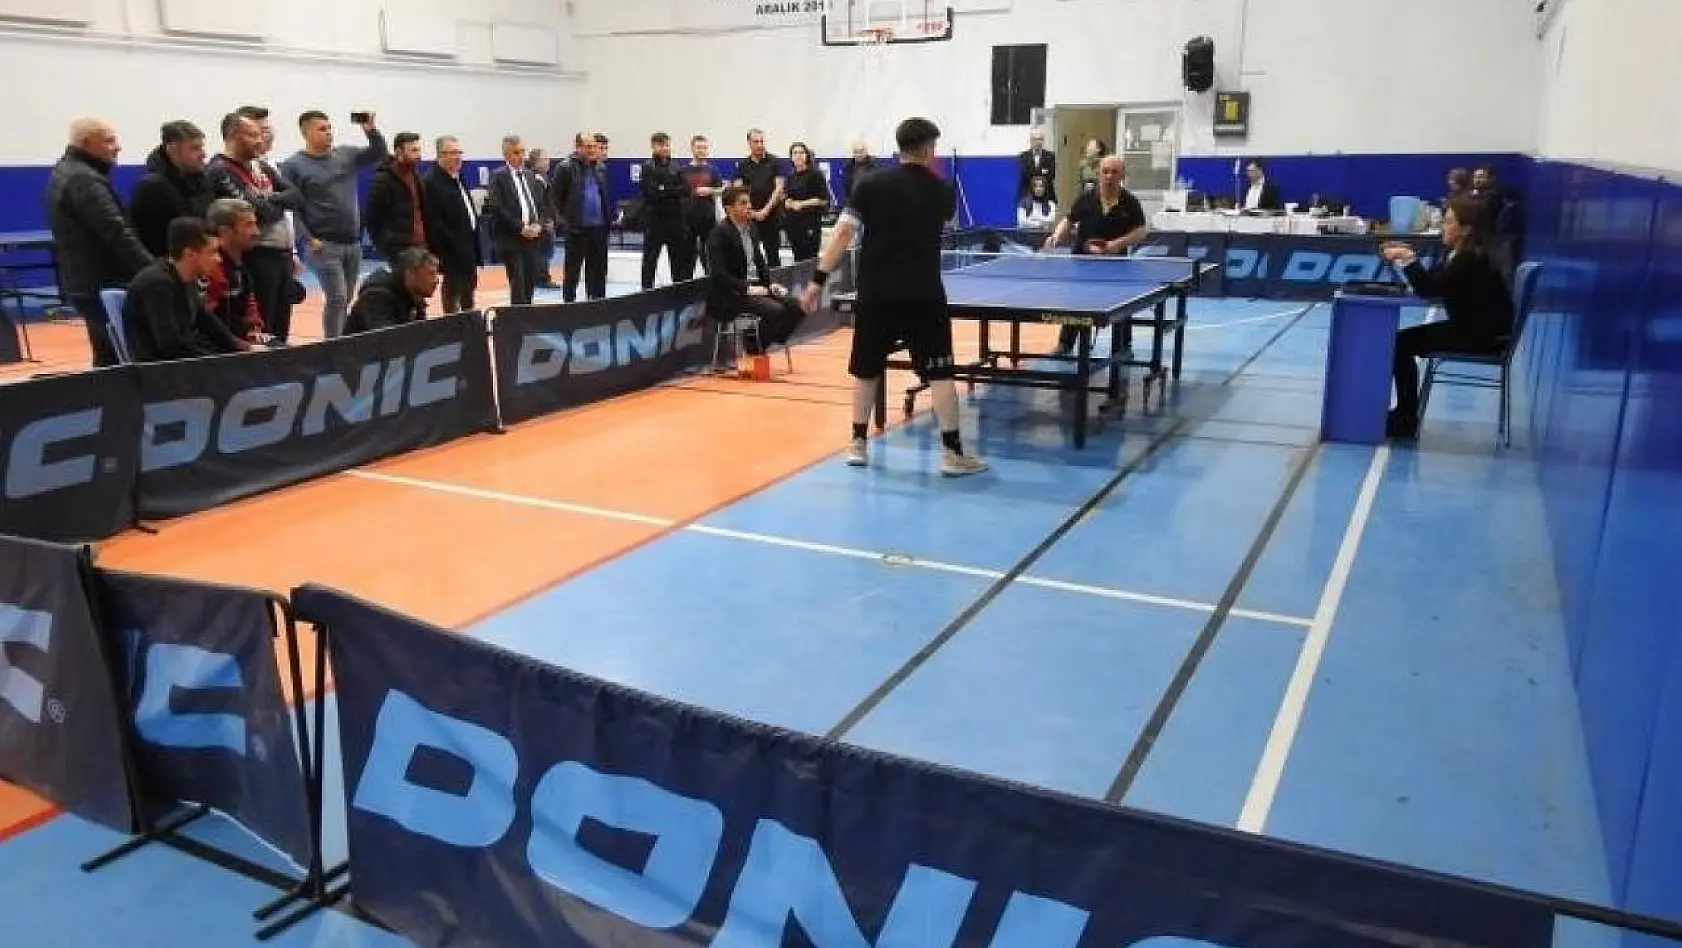 Kütahya OBM'de masa tenisi turnuvası